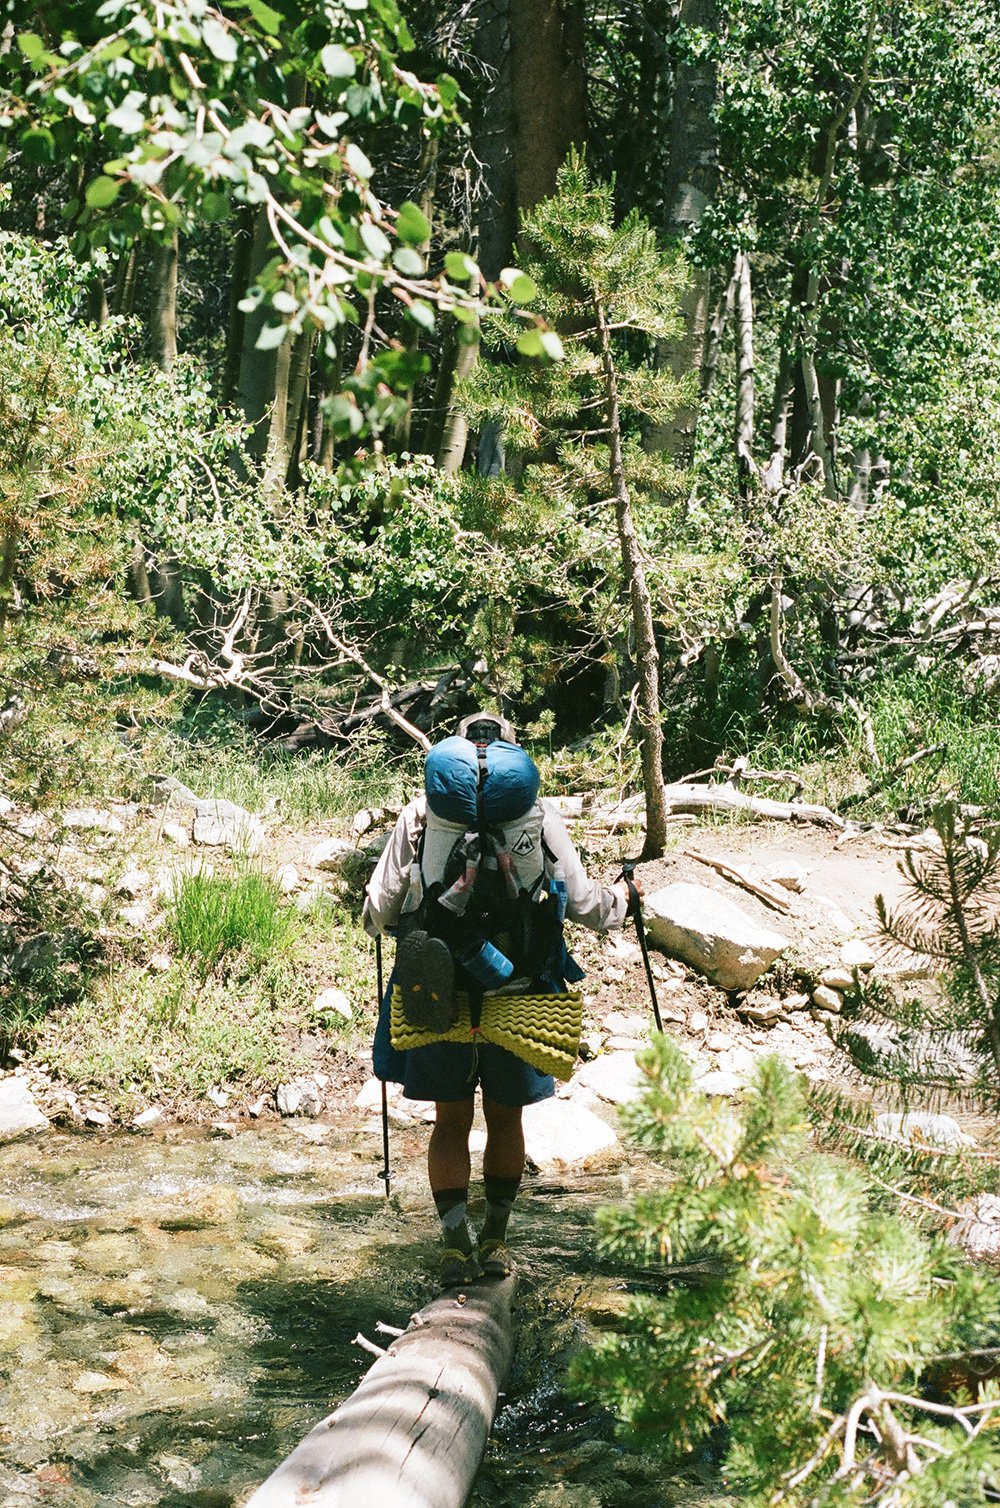  Owen heading into a river crossing, 35mm film 